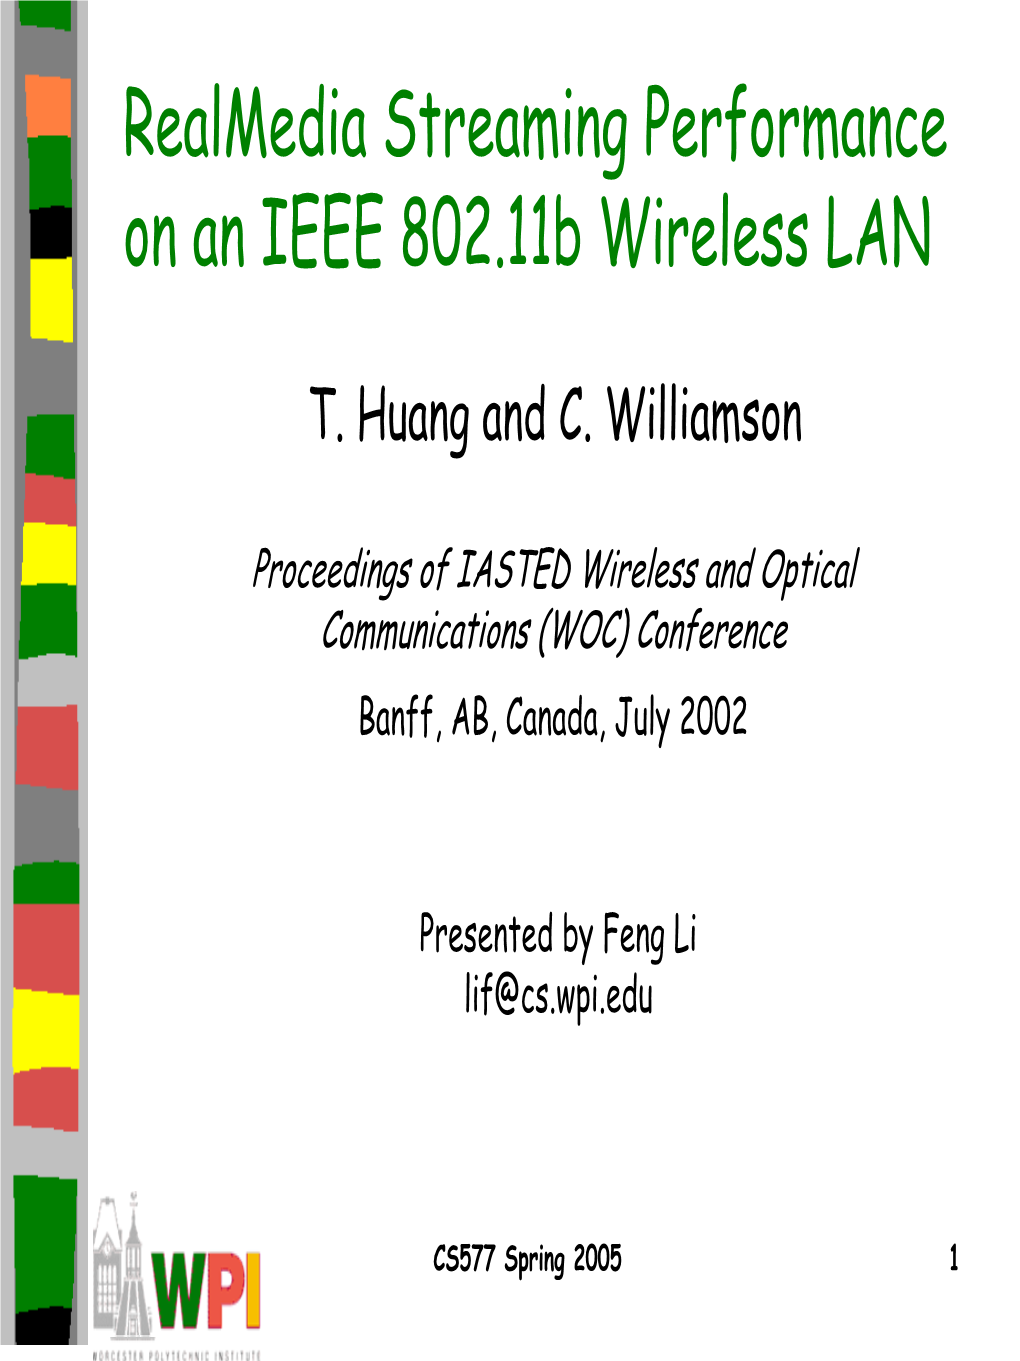 Realmedia Streaming Performance on an IEEE 802.11B Wireless LAN